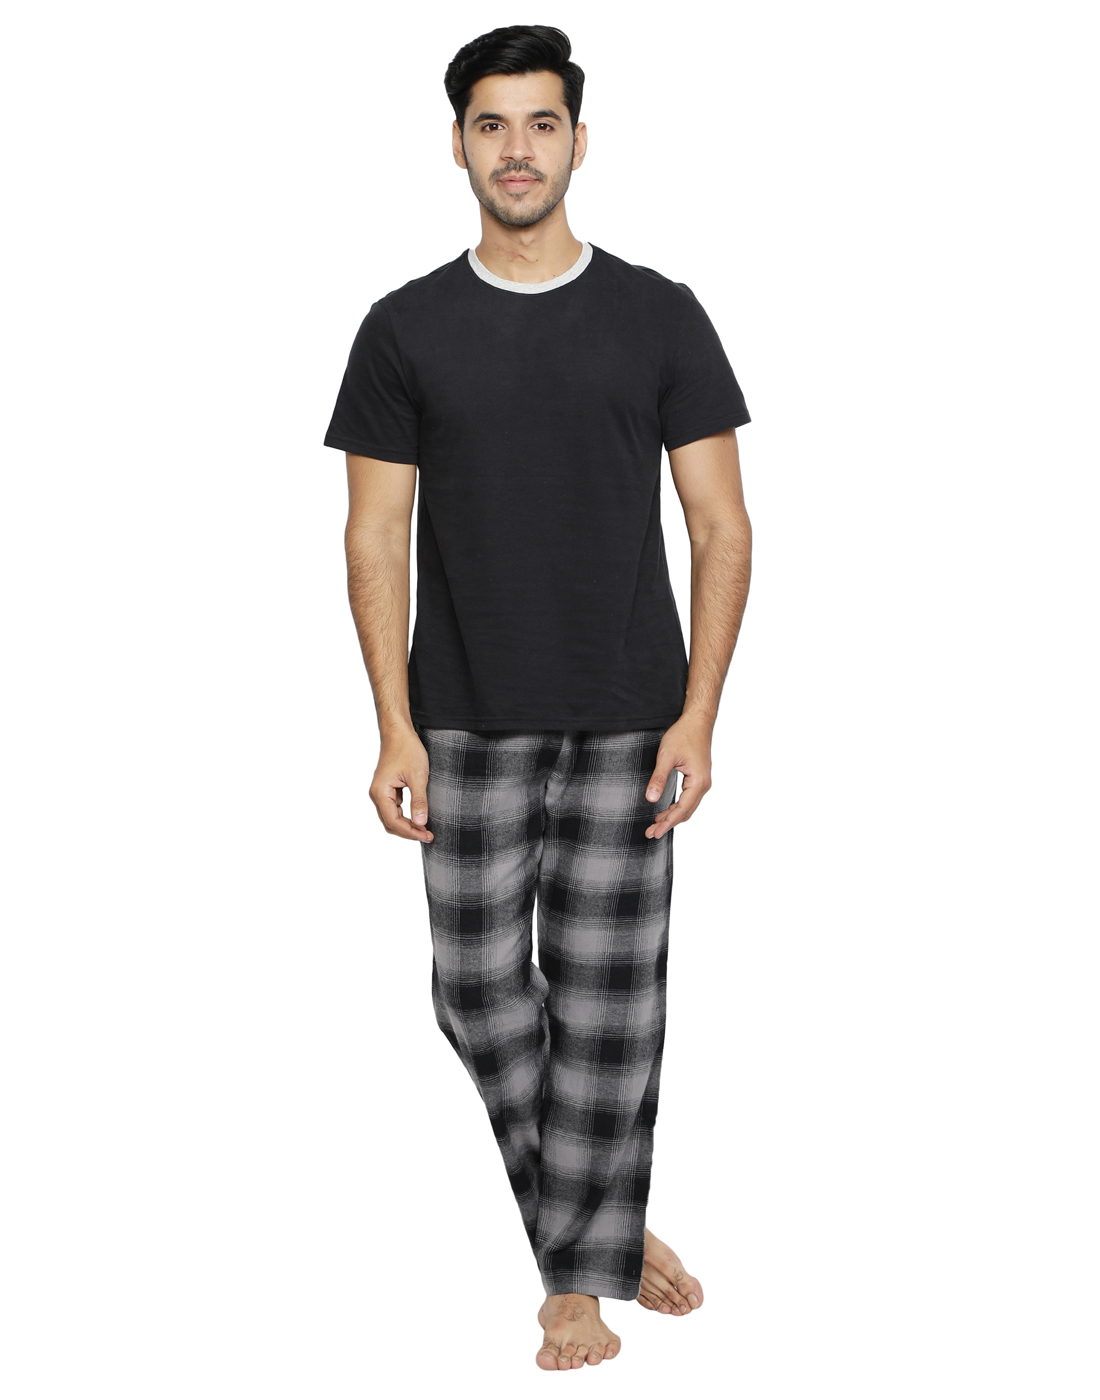 Pyjama Set for Men-Black Checks